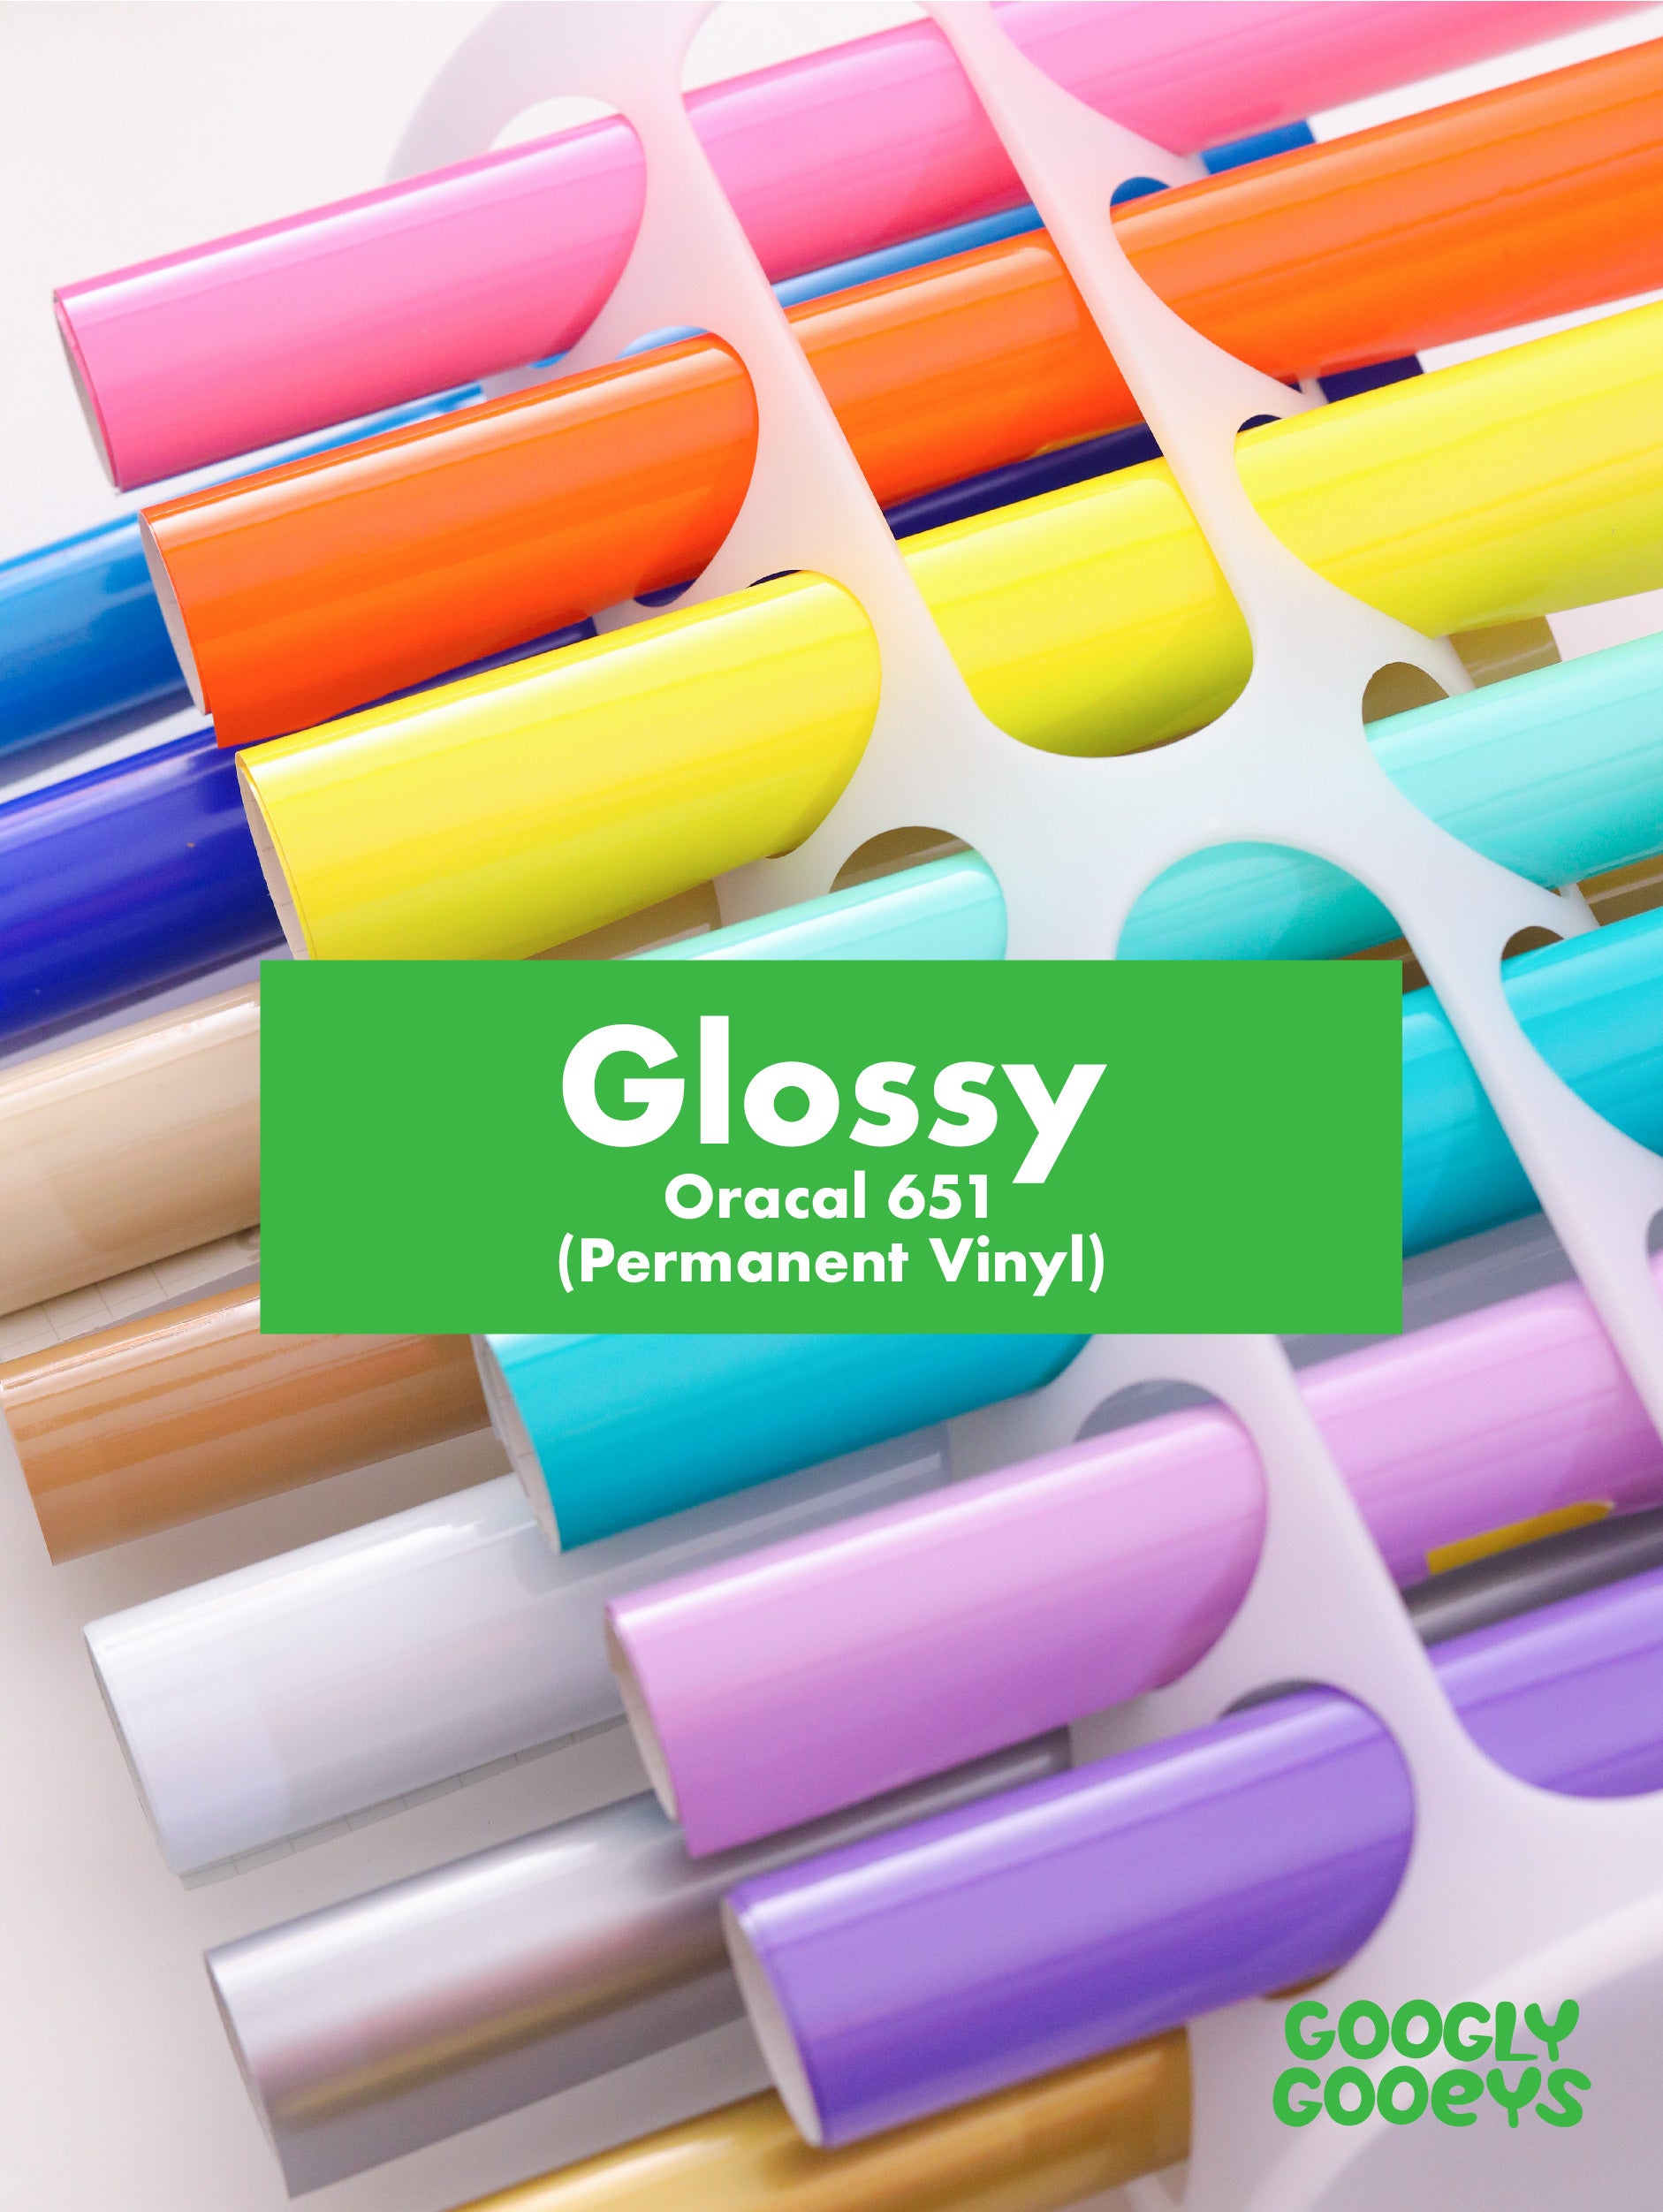 Glossy | Oracal 651 Hi-lite Vinyl Stickers Cricut Cutting Machines 12x12